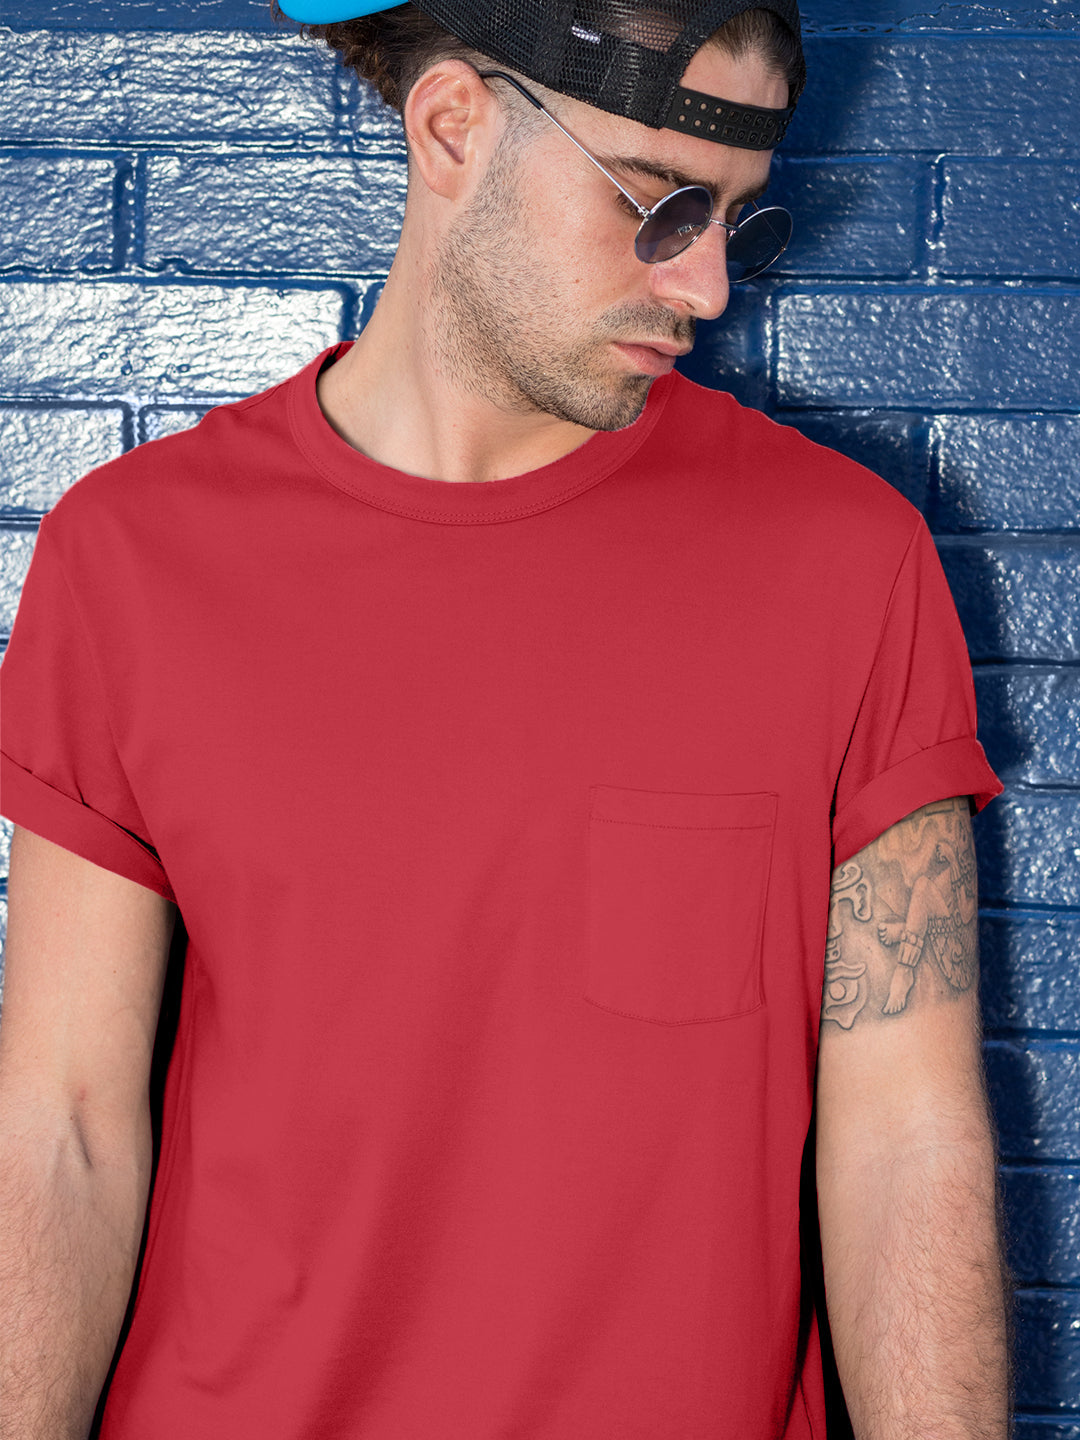 Baliza Men's 100% Cotton Round Neck T-shirt- Red